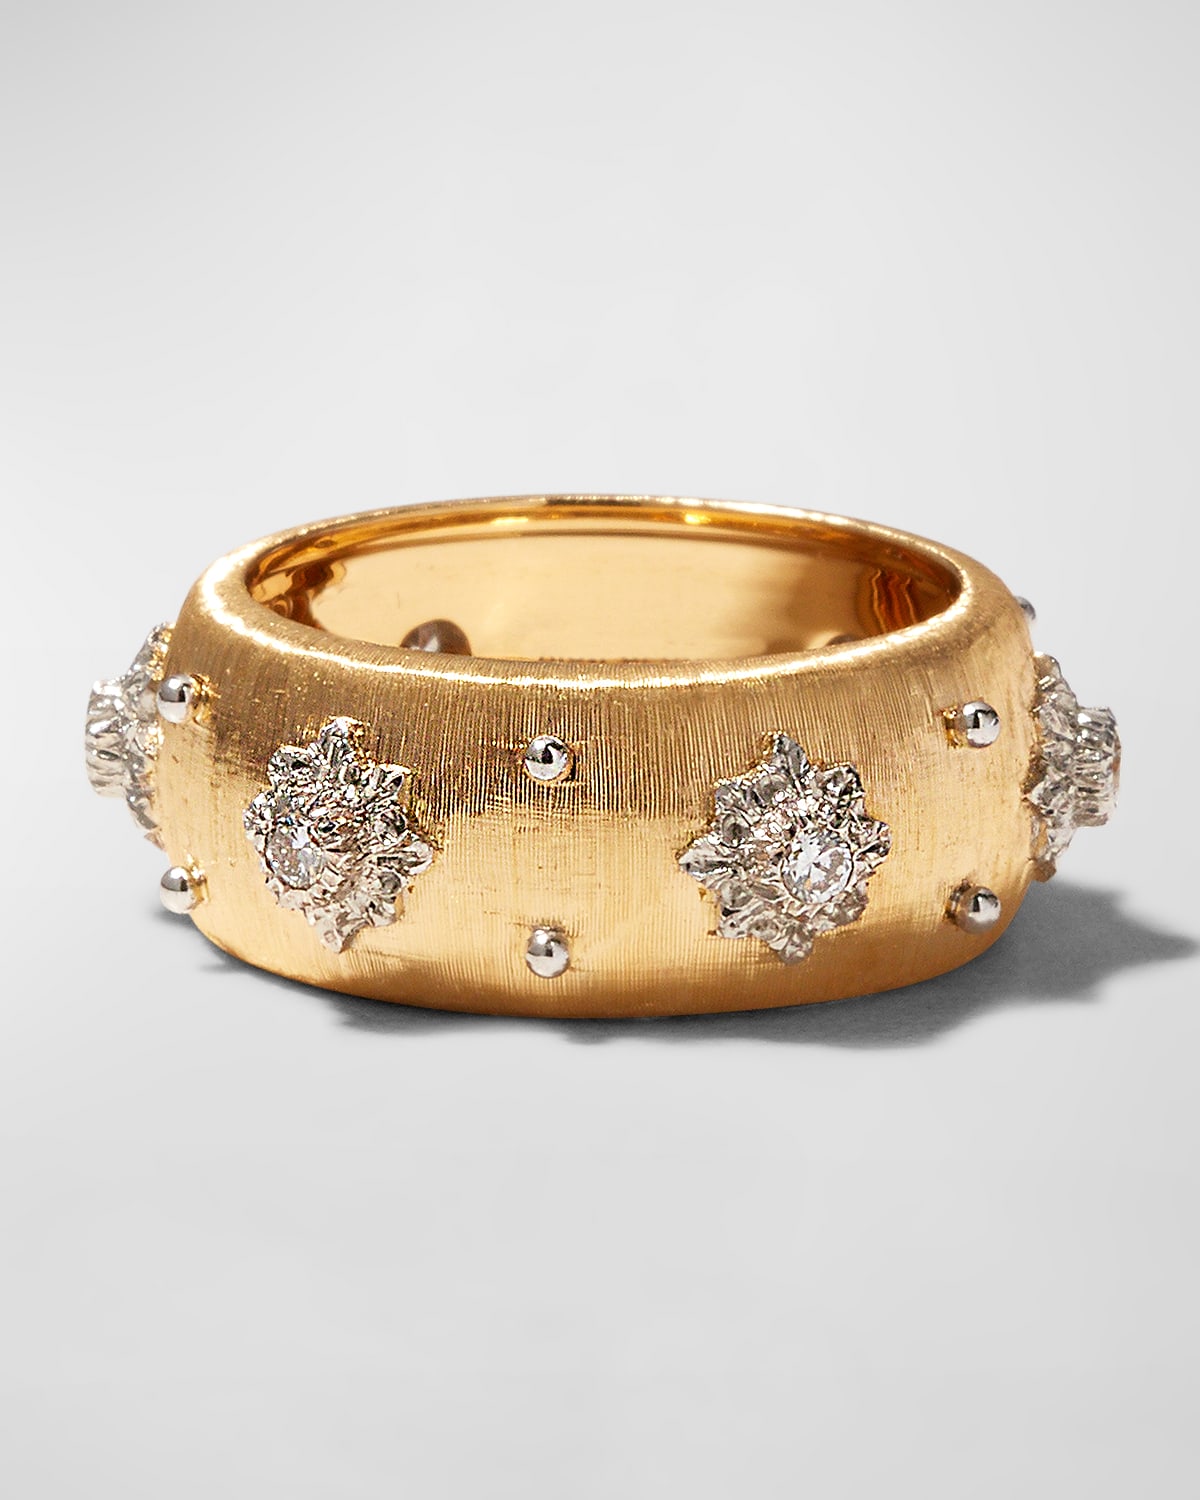 BUCCELLATI Eternelle Fusi white and yellow gold diamond ring